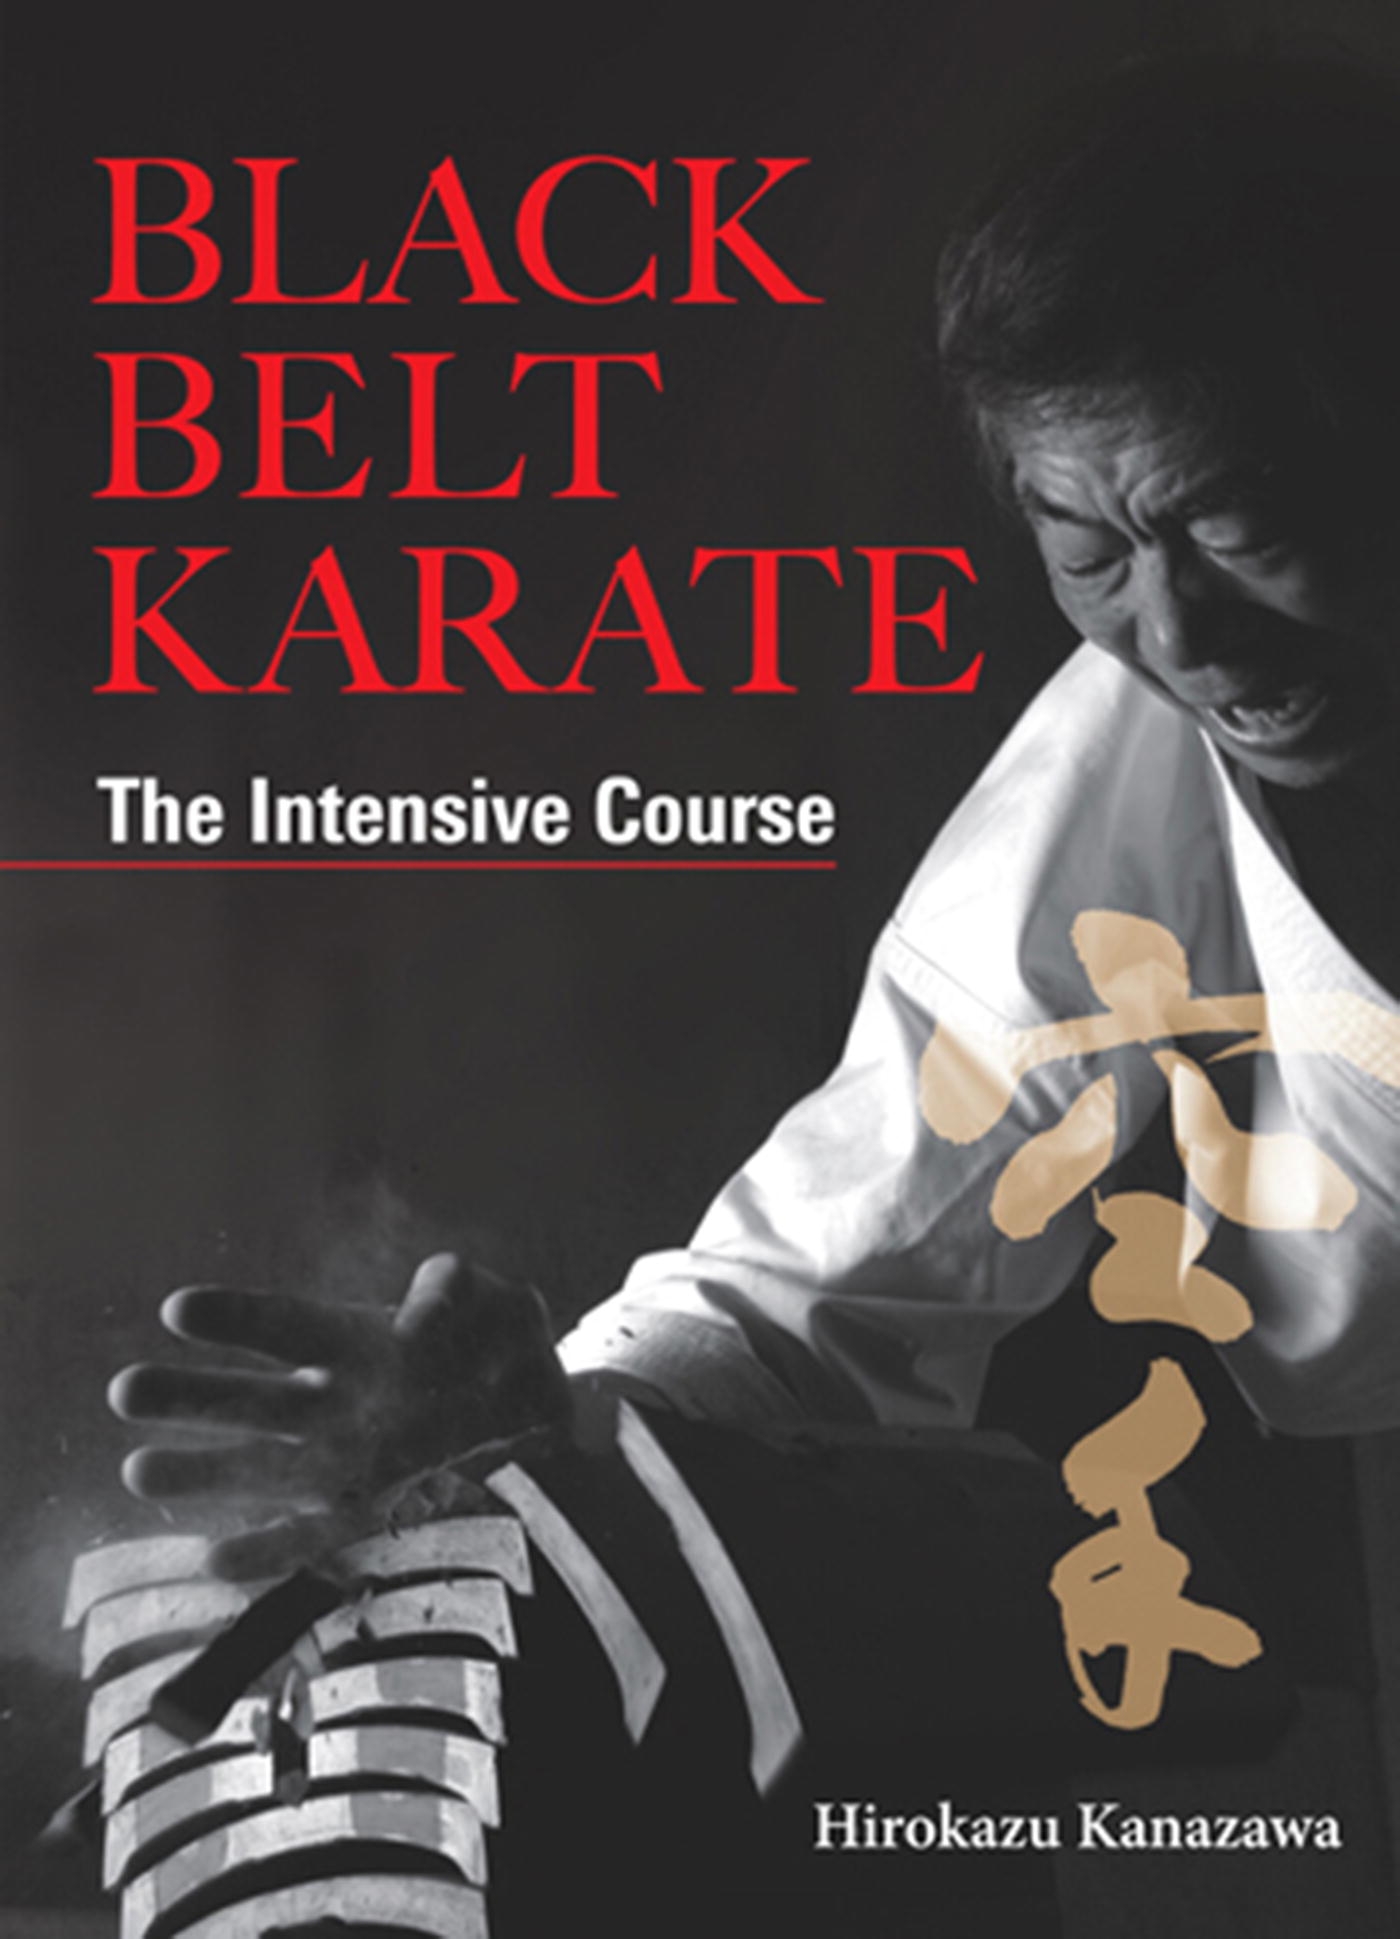 Black Belt Karate by Hirokazu Kanazawa - Penguin Books Australia